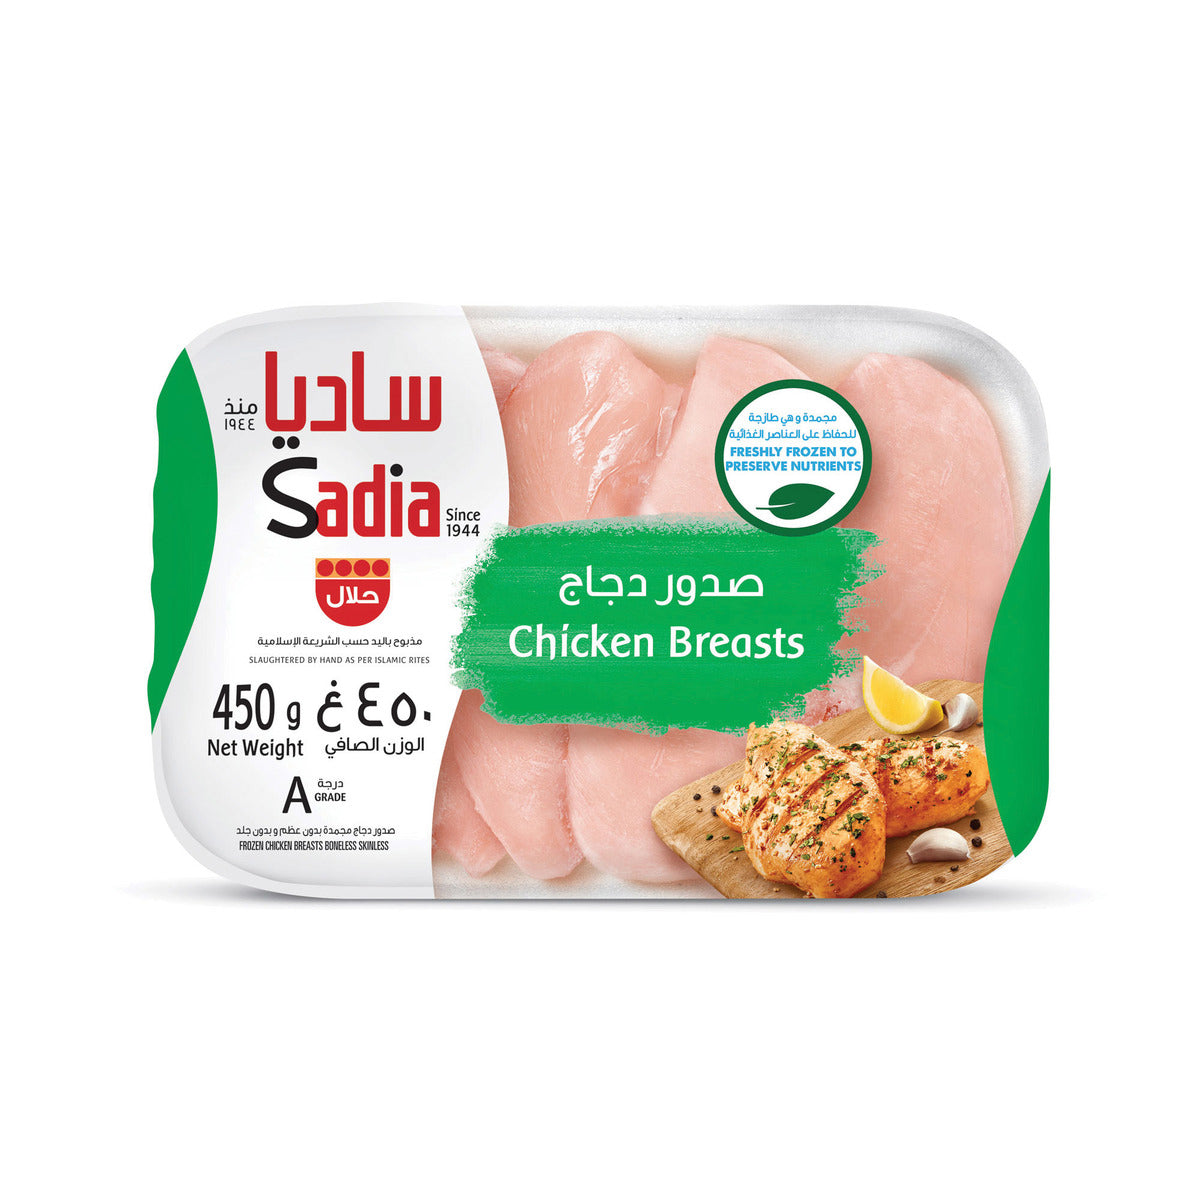 Chicken Breast Boneless, Skinless 450g - Sadia